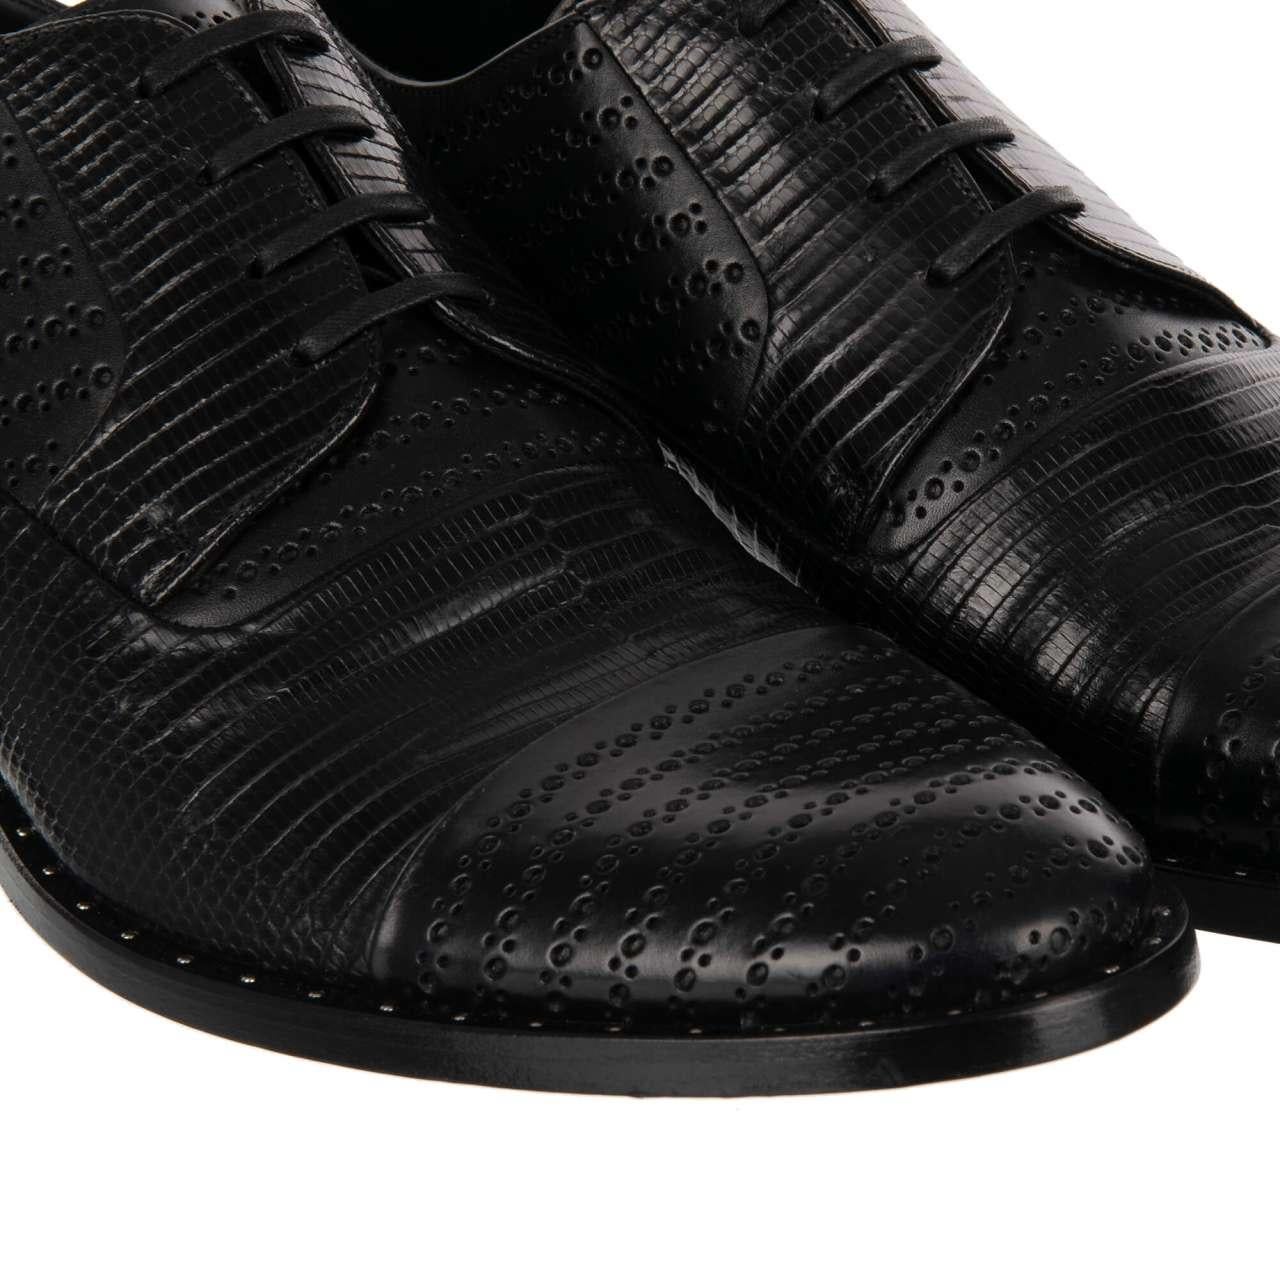 D&G Formal Patchwork Lizard Leather Derby Shoes NAPOLI Black 44 UK 10 US 11 For Sale 1